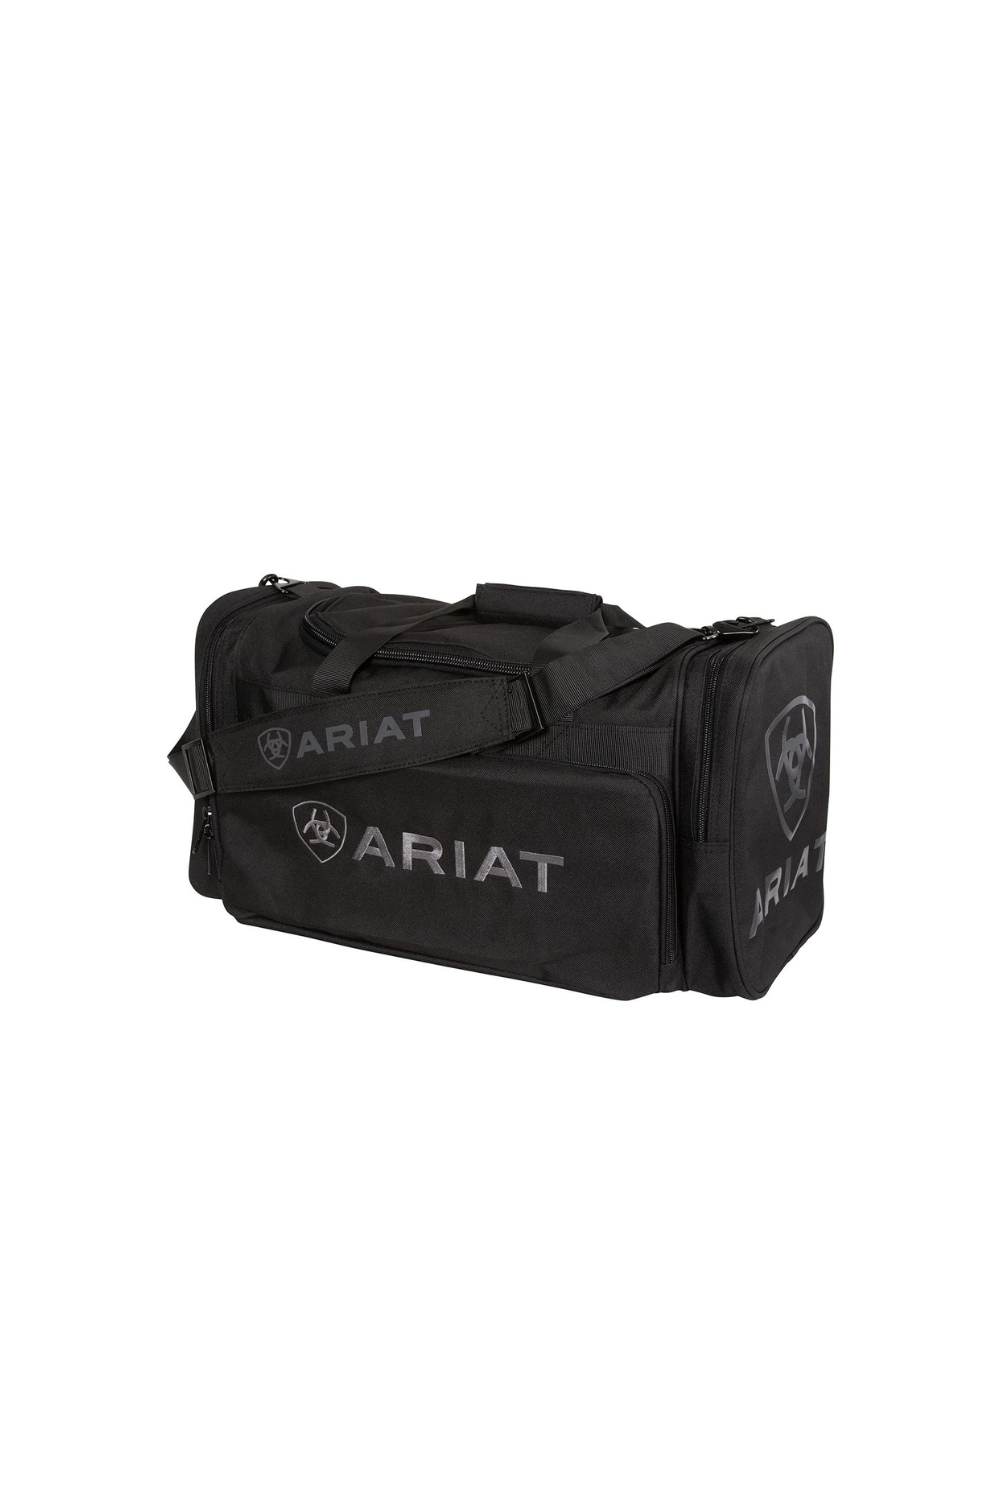 ARIAT Junior Gear Bag